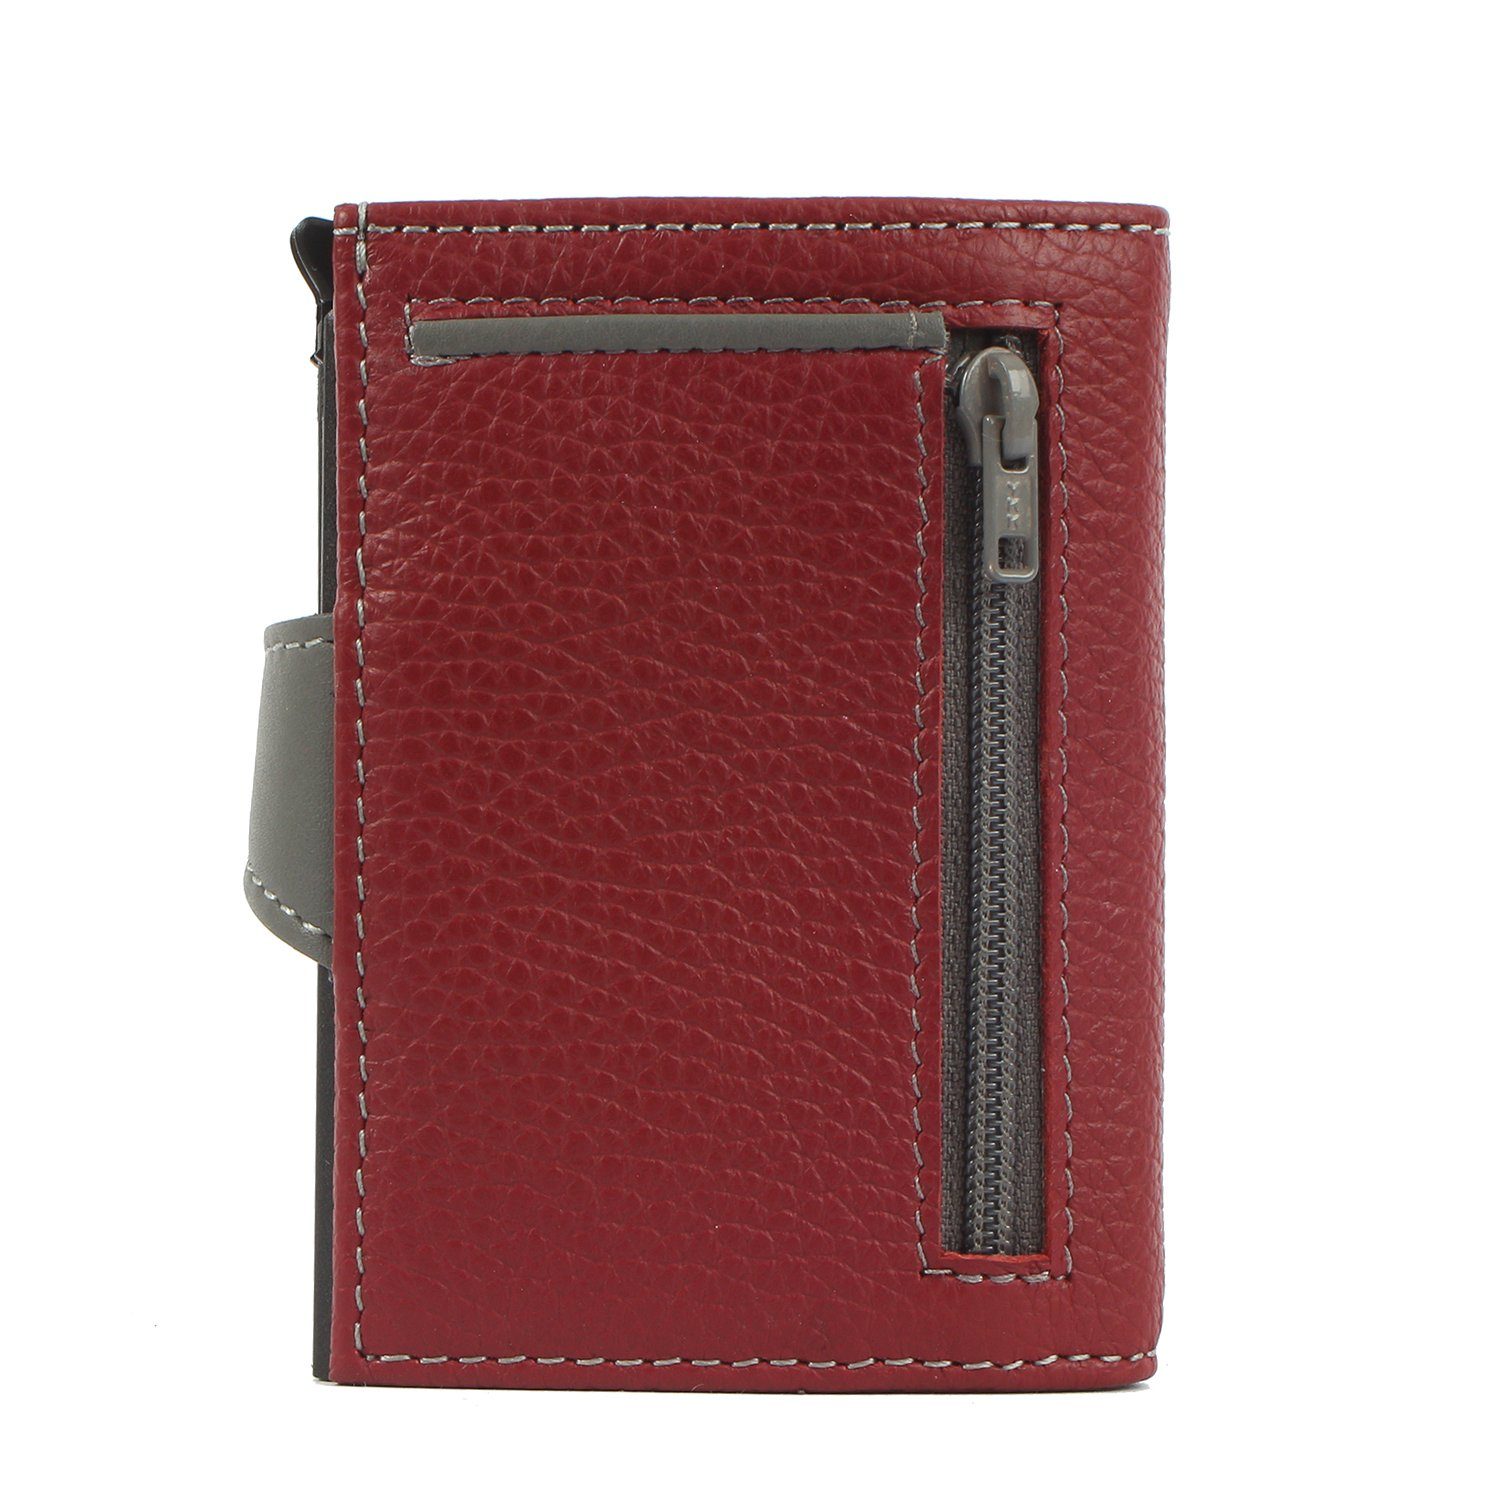 karminrot Leder RFID Upcycling noonyu Geldbörse Kreditkartenbörse aus Margelisch leather, Mini double